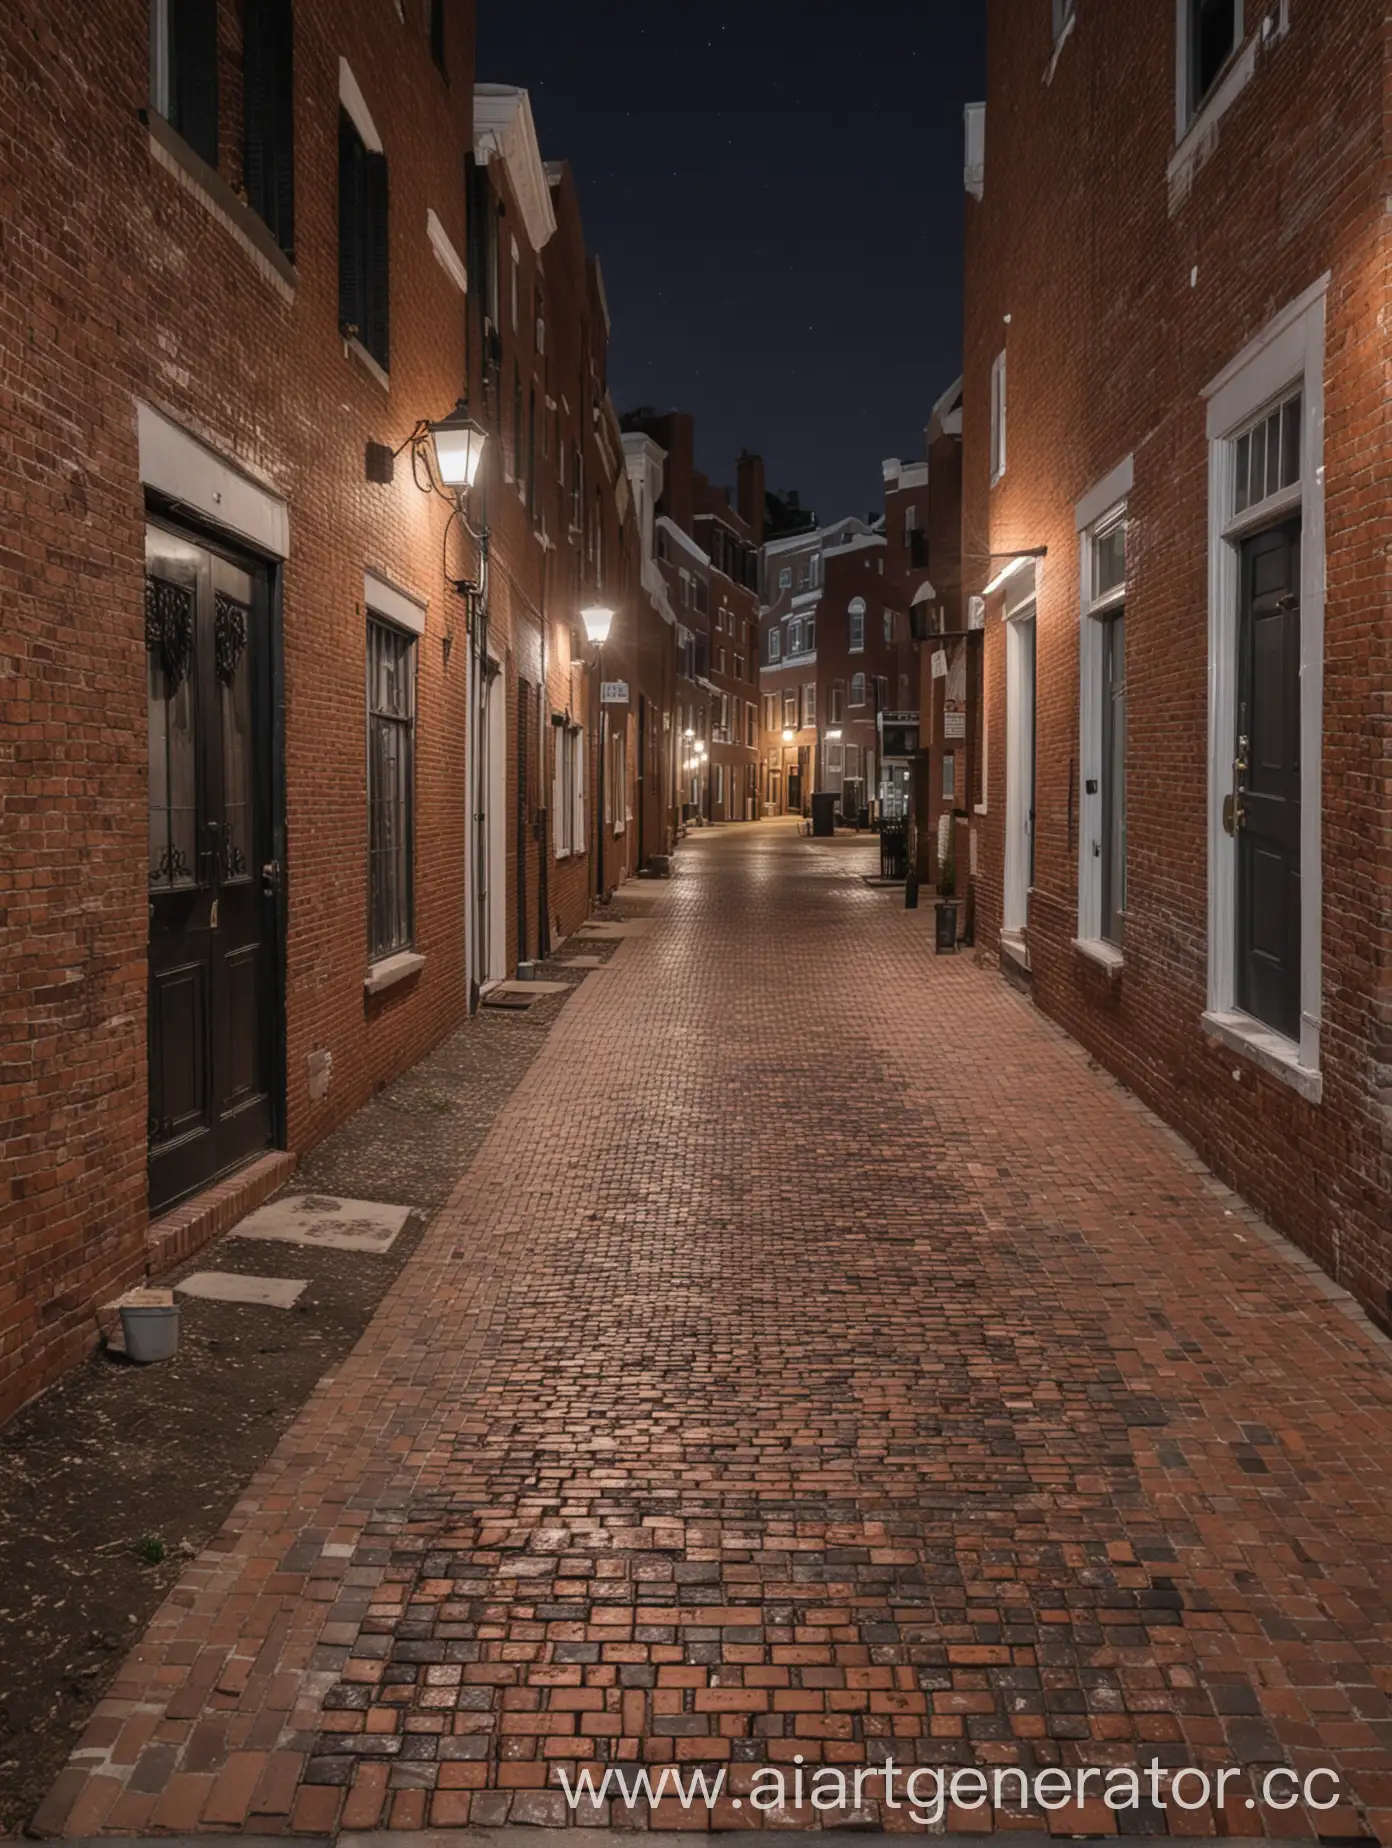 Night-Scene-with-Illuminated-Buildings-and-Brick-Walkway